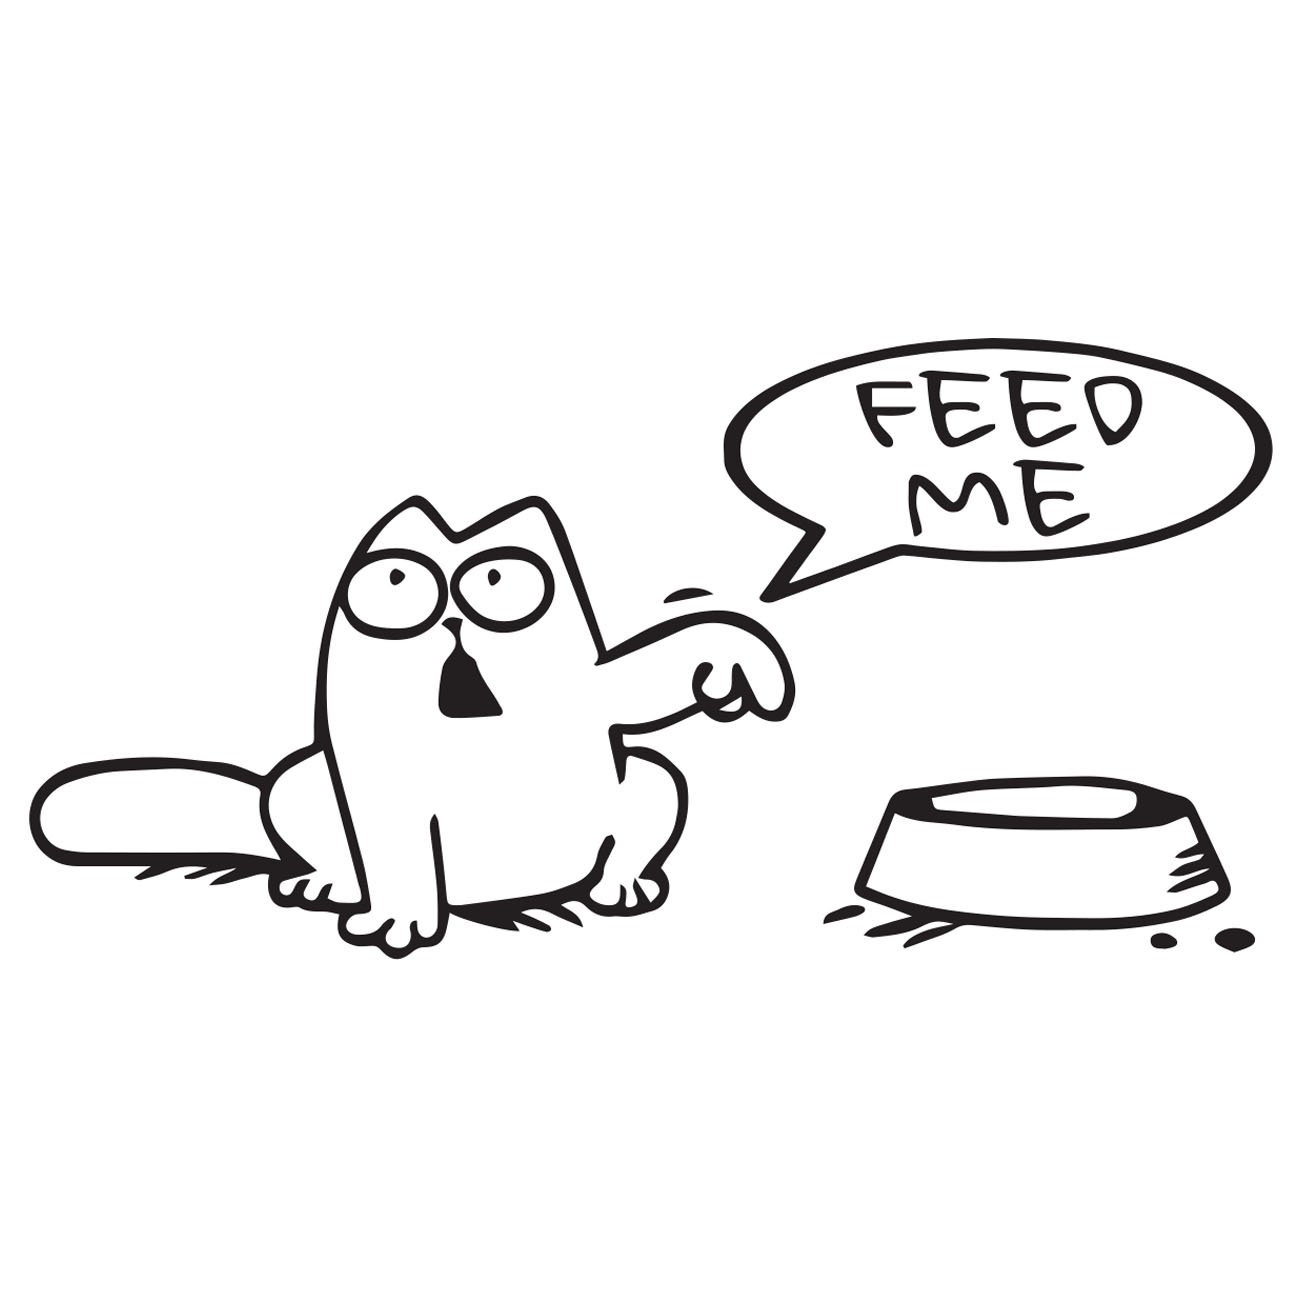 Feed me cat